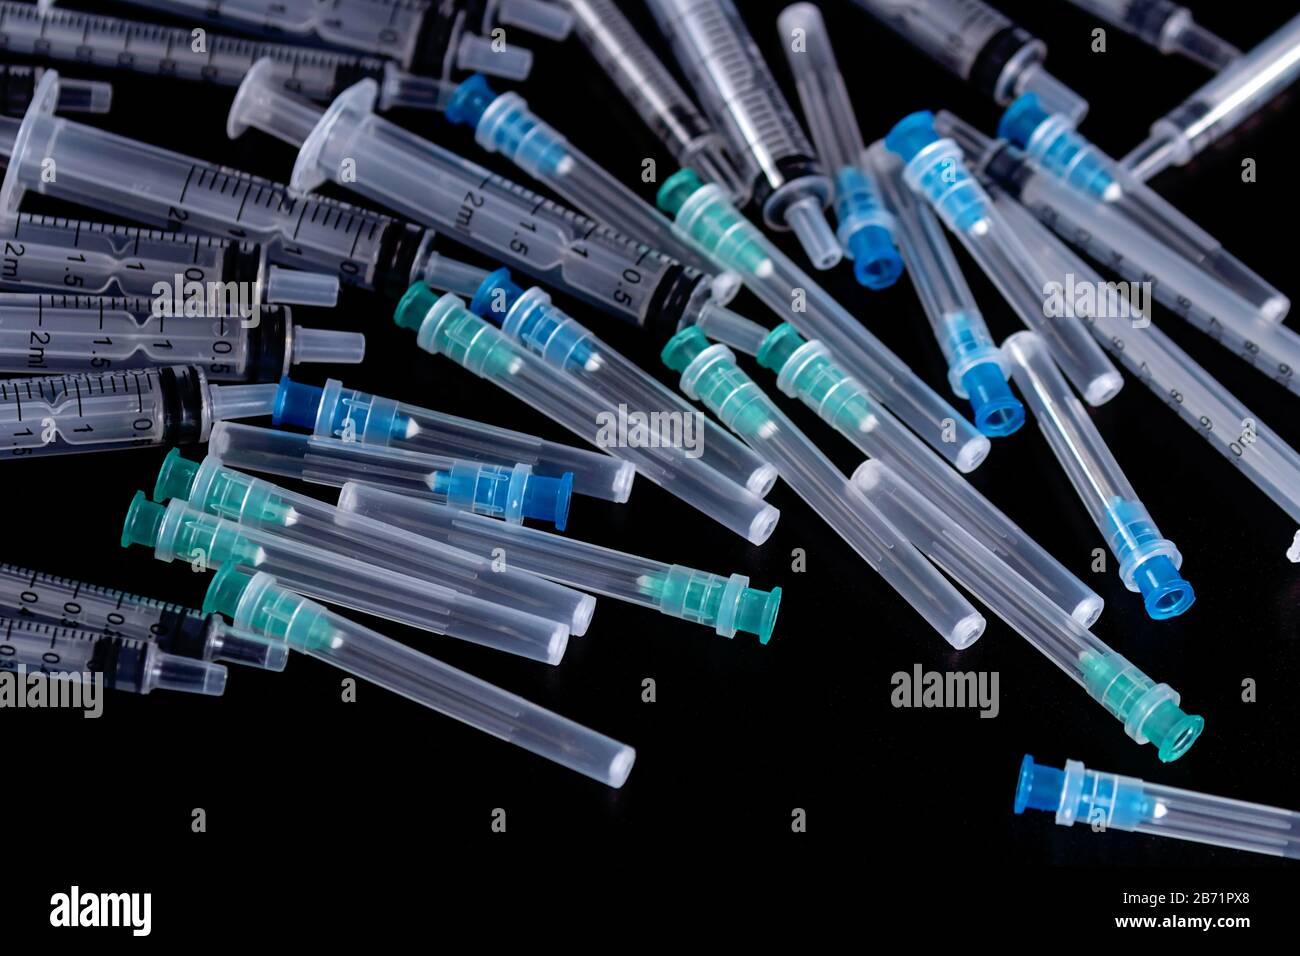 Medical Sterile Syringes Needles, Close up Syringes on Black Background, Health care concept. Stock Photo